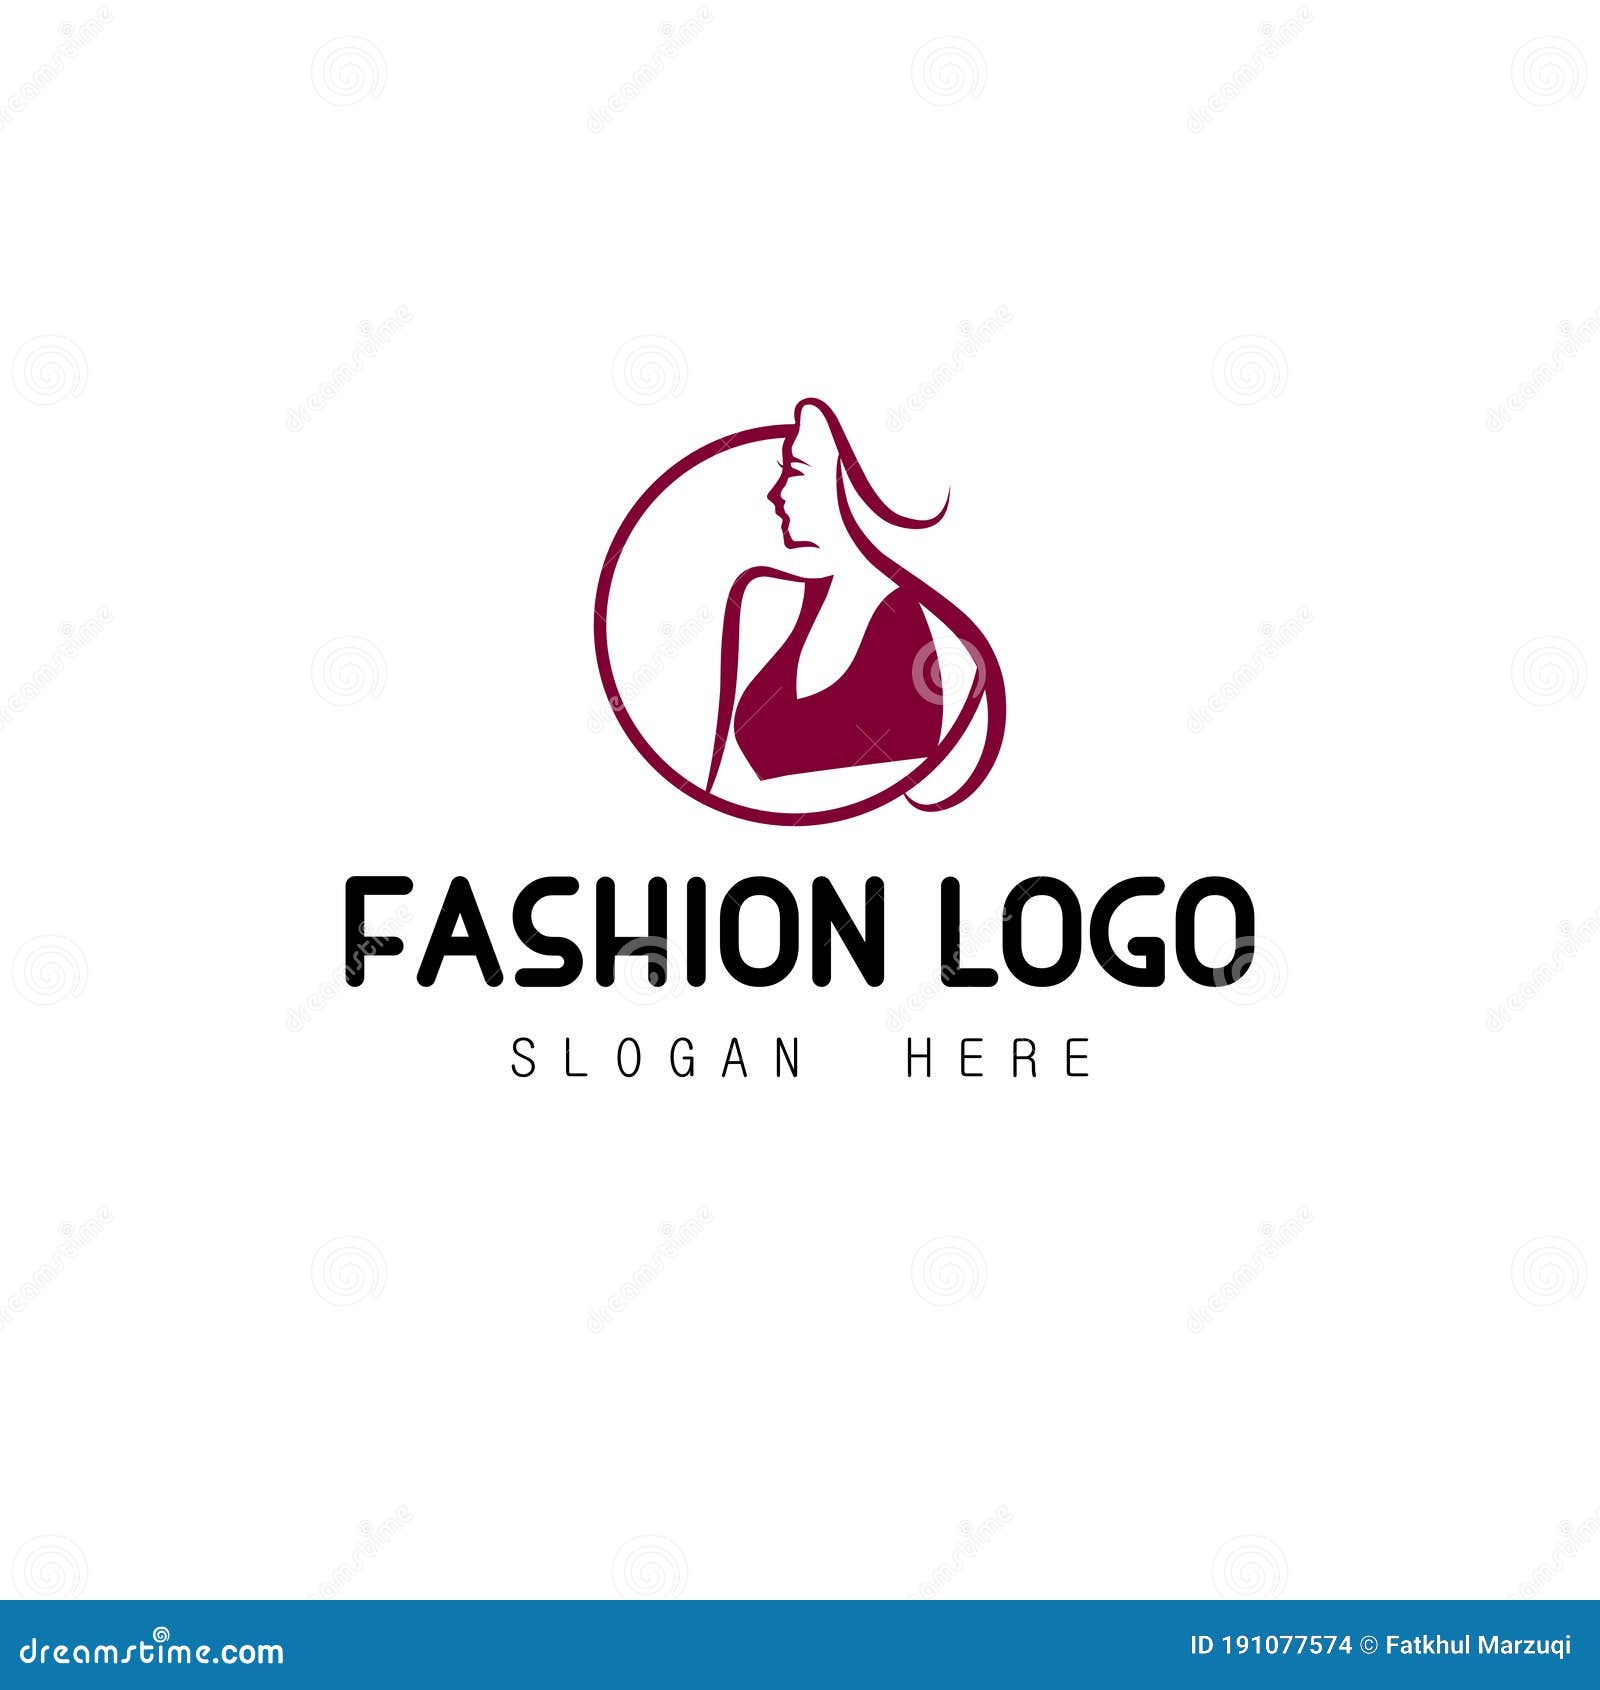 Illustration Vector Graphic of Fashion Logo Stock Vector - Illustration ...